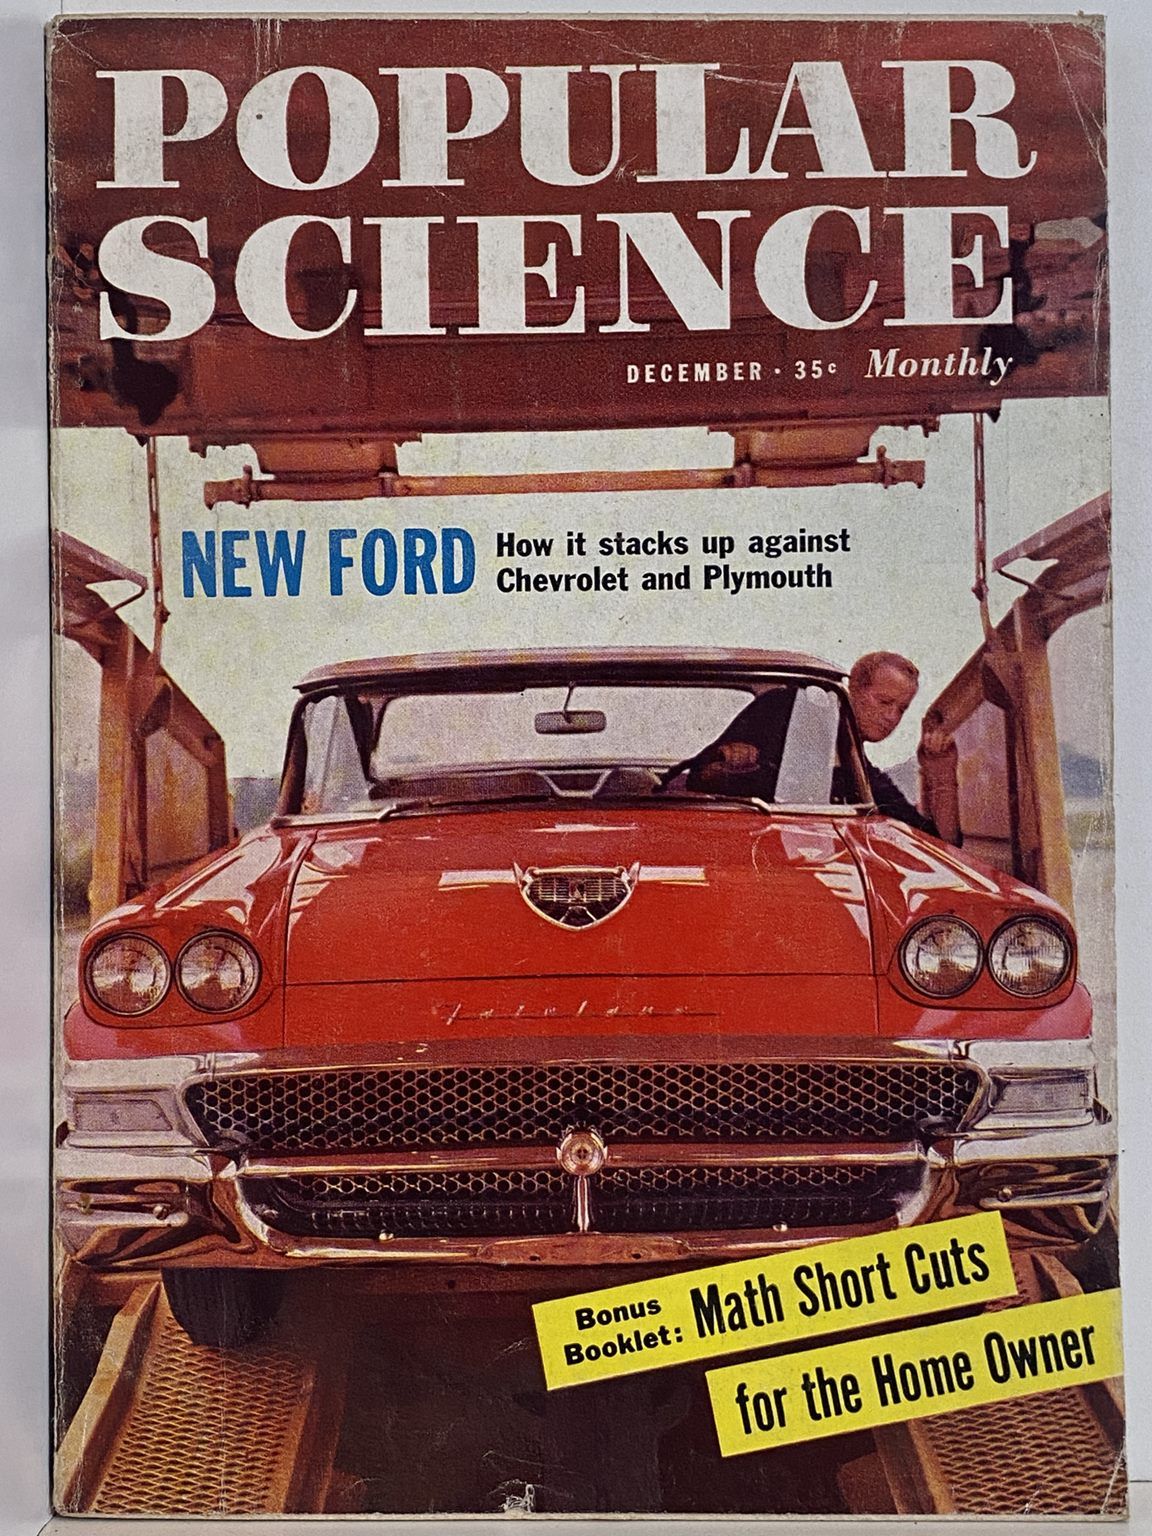 VINTAGE MAGAZINE: Popular Science, Vol. 171, No. 6 - December 1957